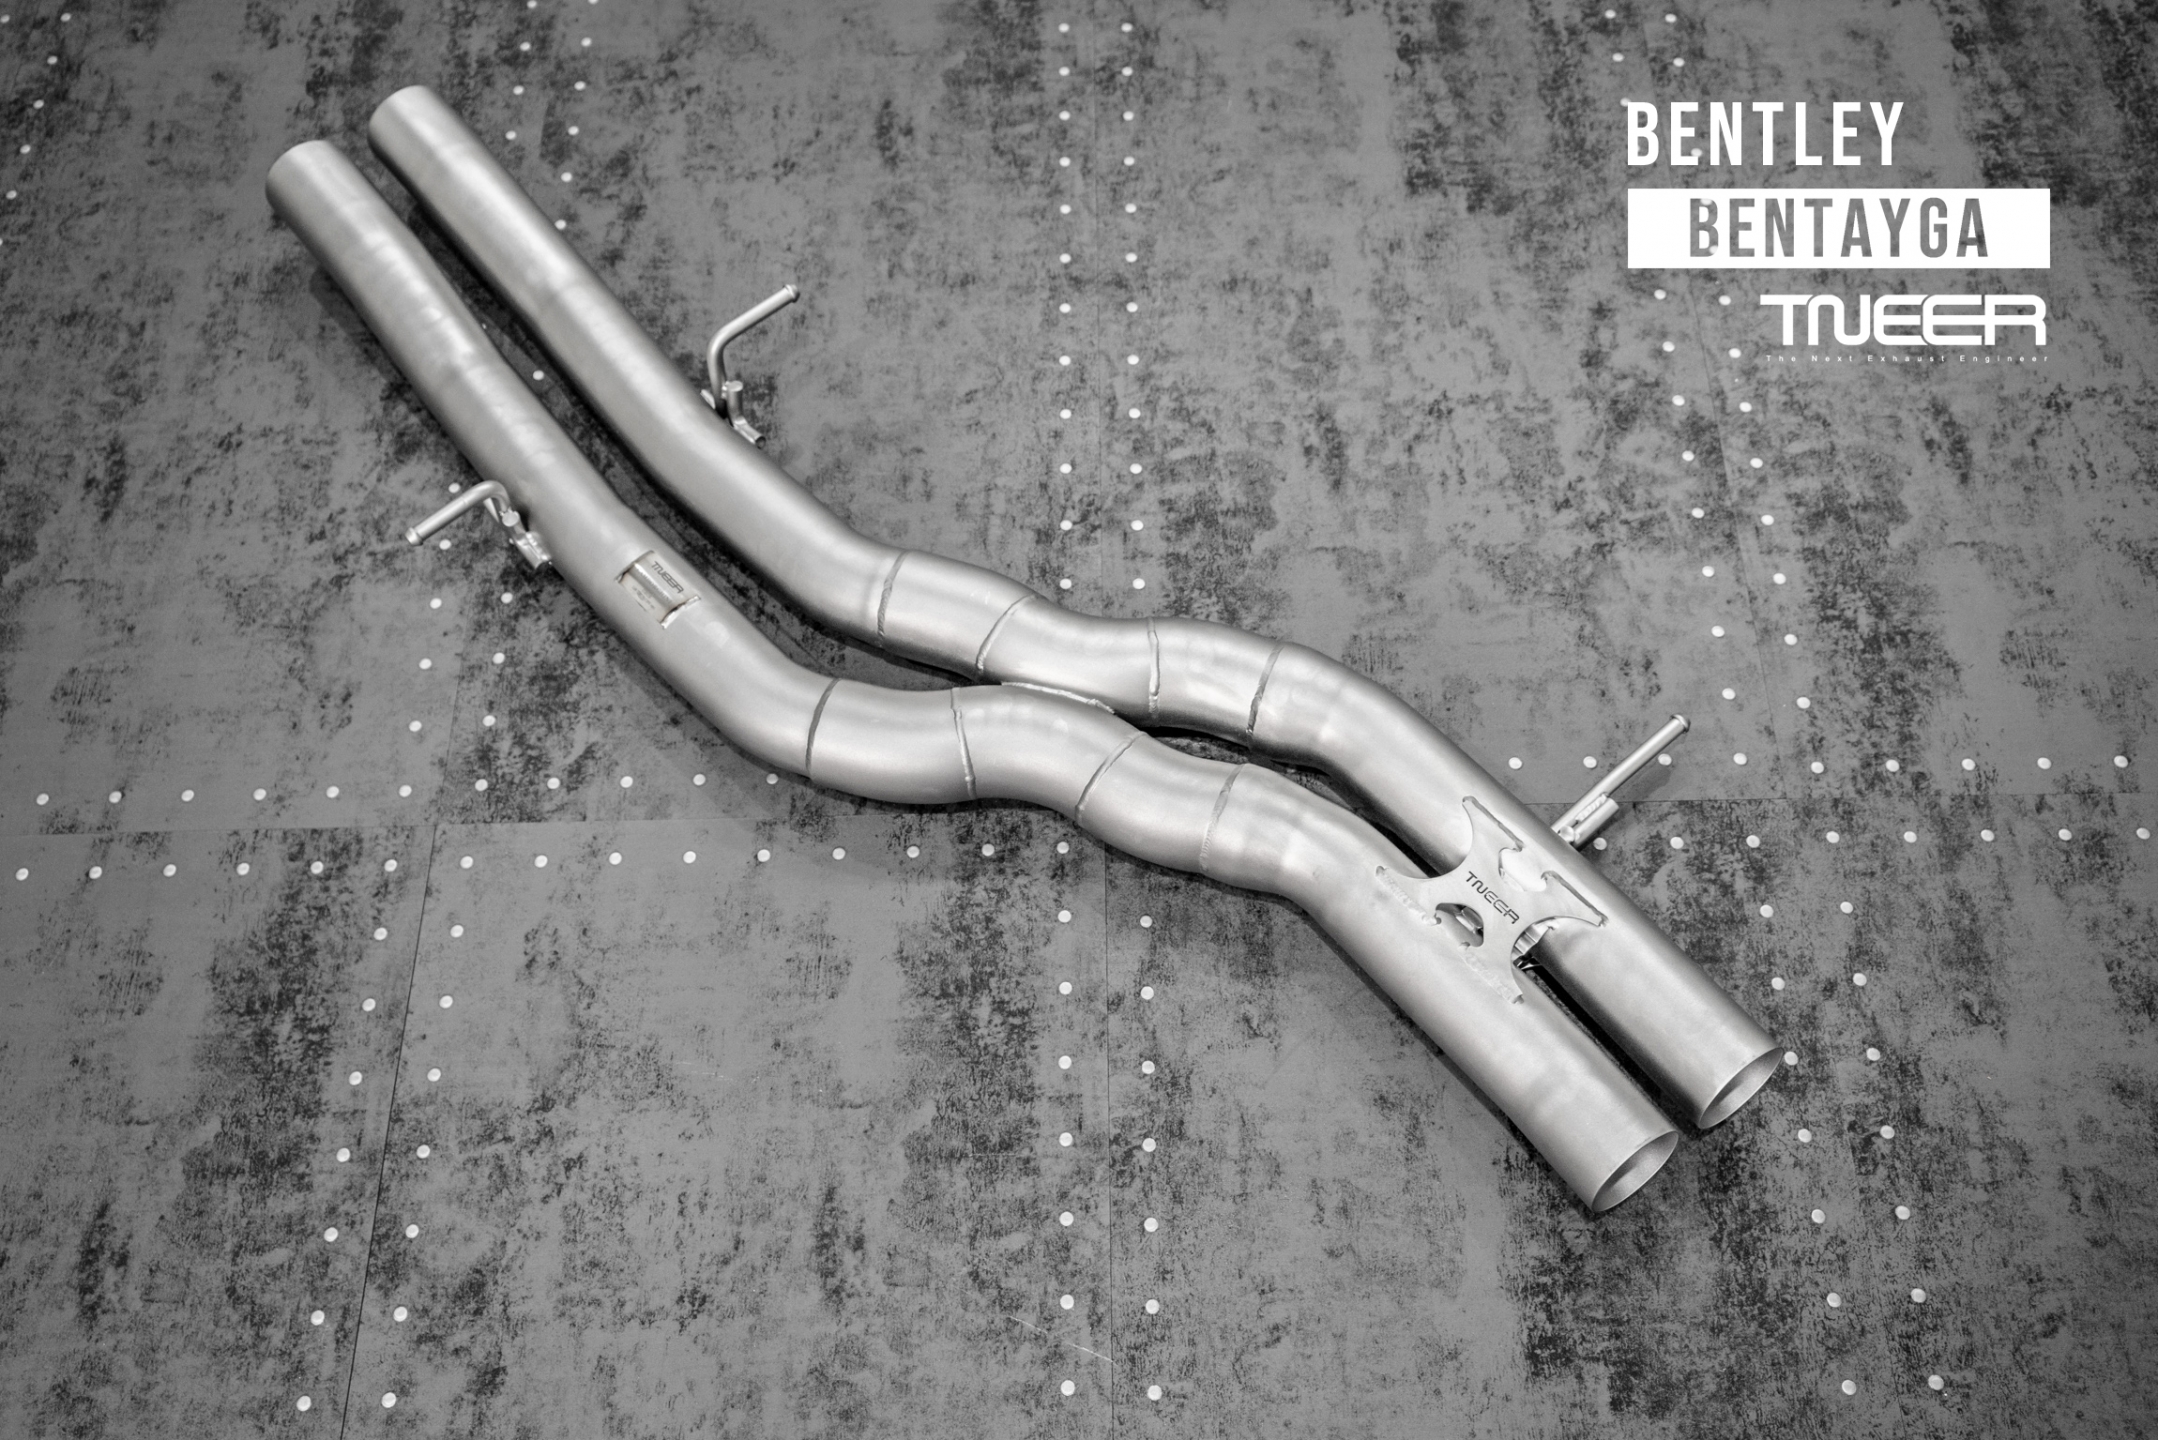 Bentley Bentayga W12 TNEER Valvetronic Exhaust System